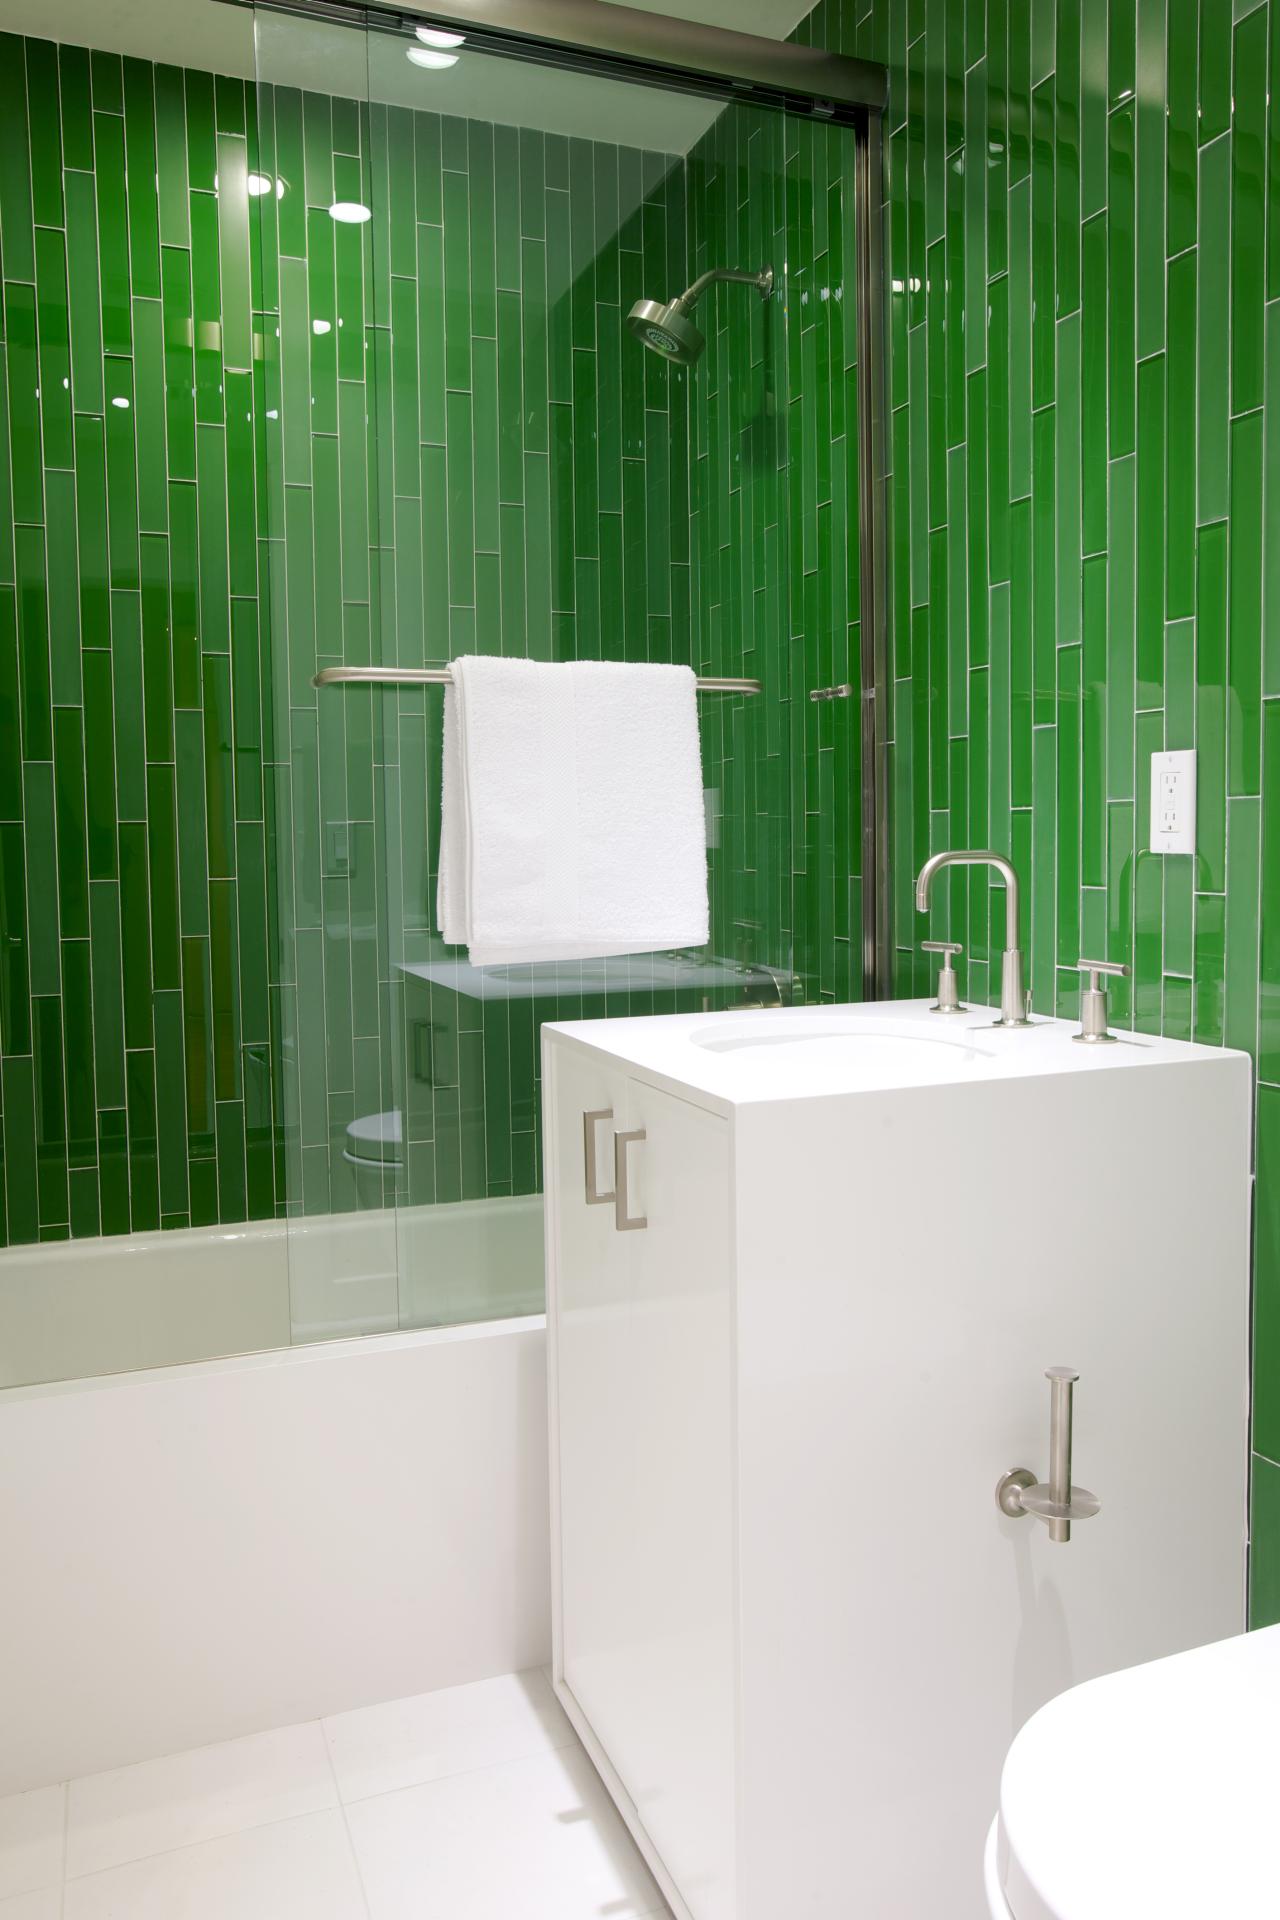 Modern Bathroom With Vibrant Green Tiles | HGTV